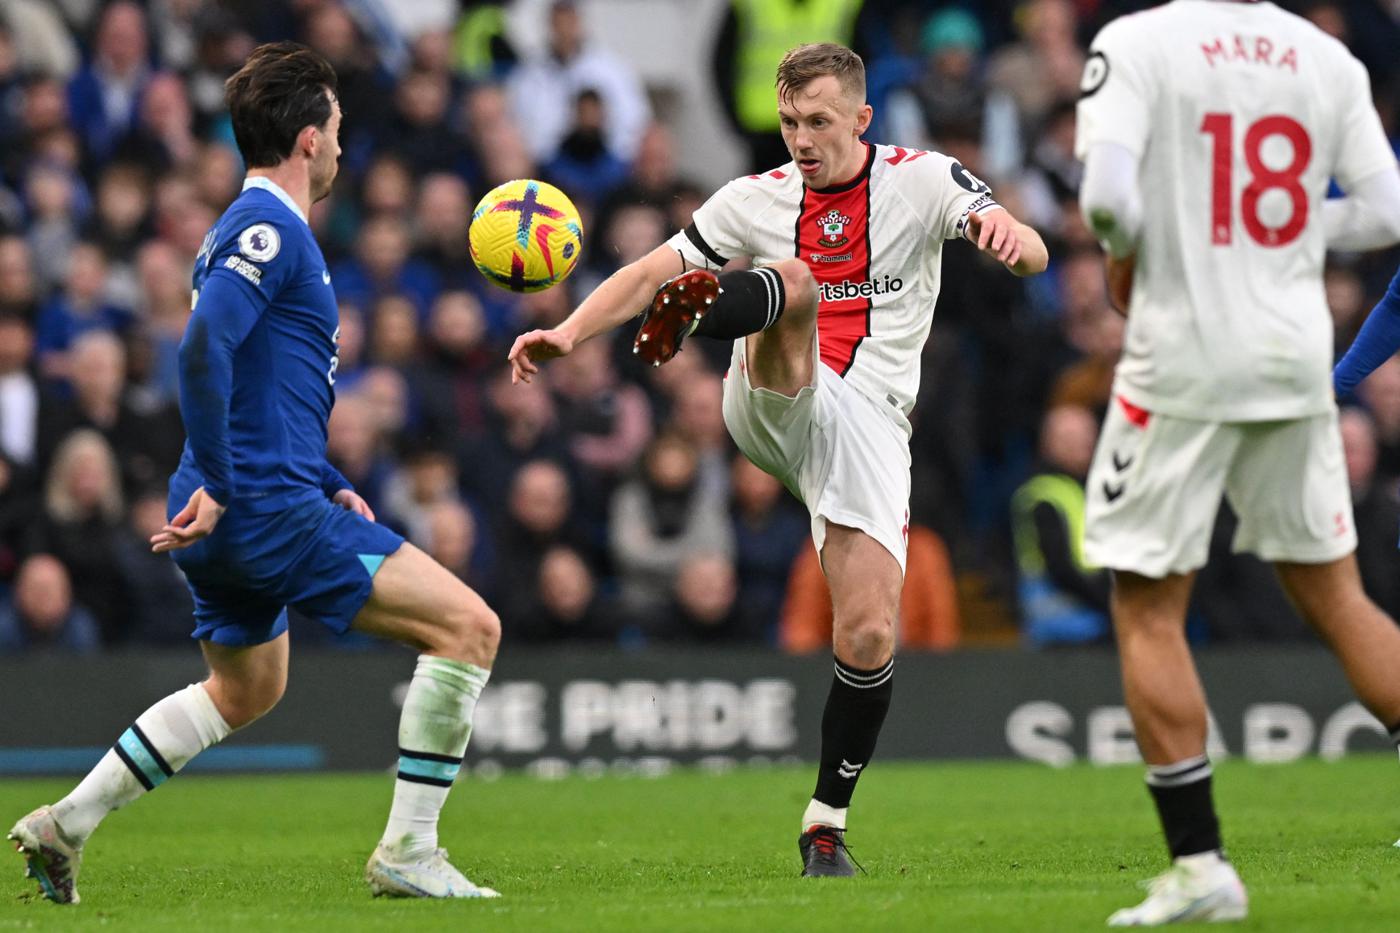 Chelsea - Southampton - 0:1. English Championship, round 24